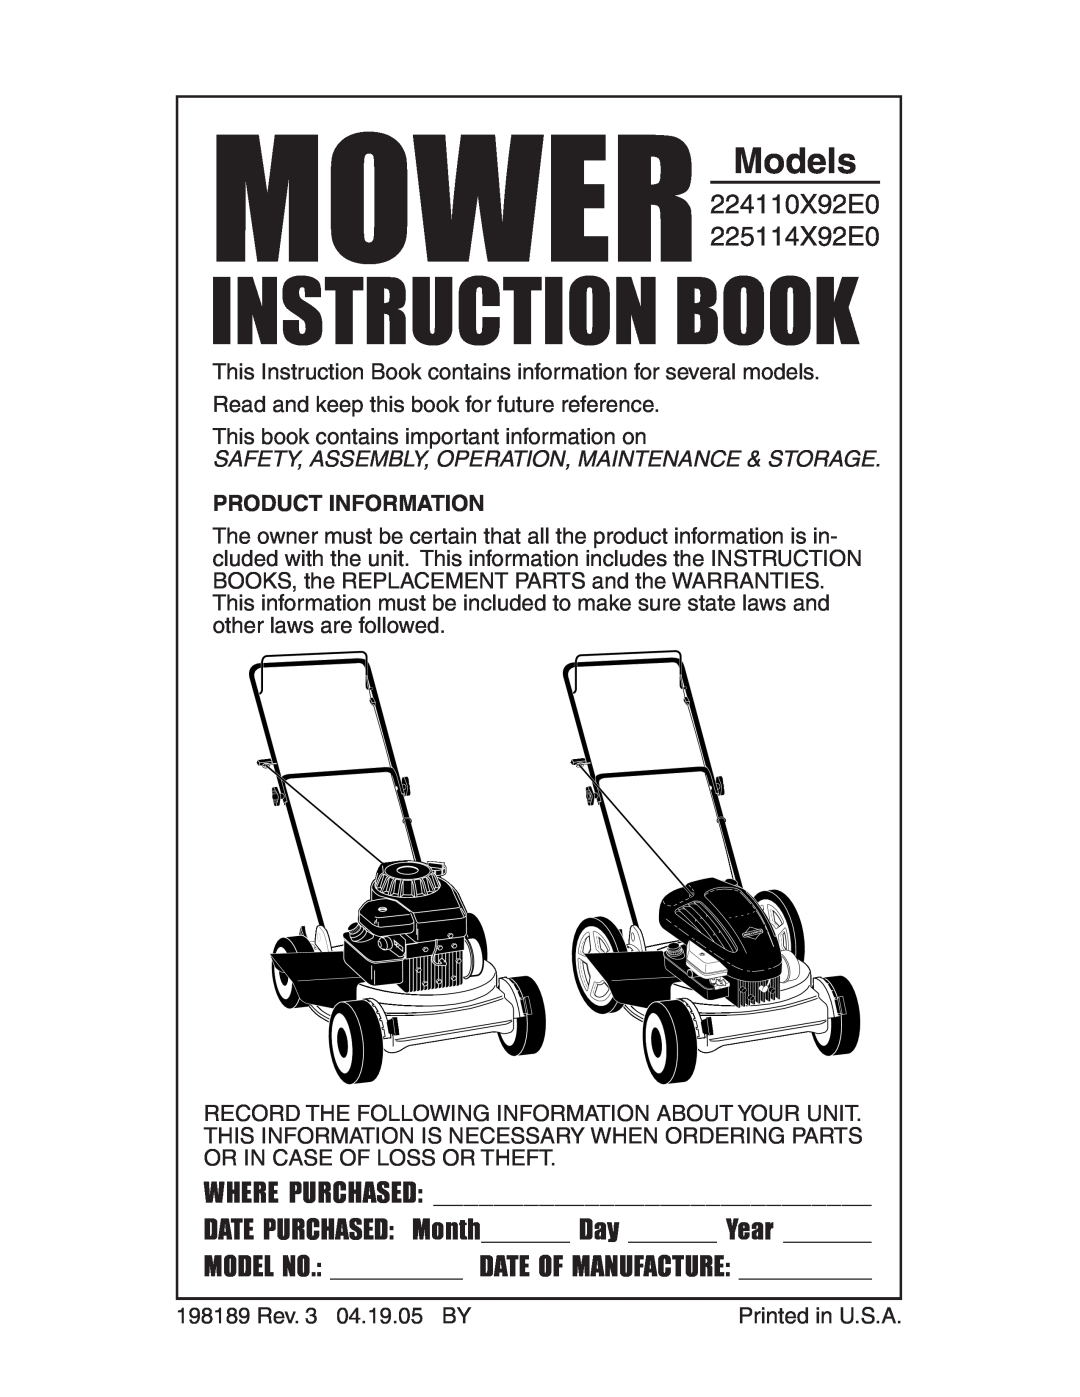 Poulan 2005-04 manual Product Information, MOWER Models, Instruction Book, 224110X92E0 225114X92E0 